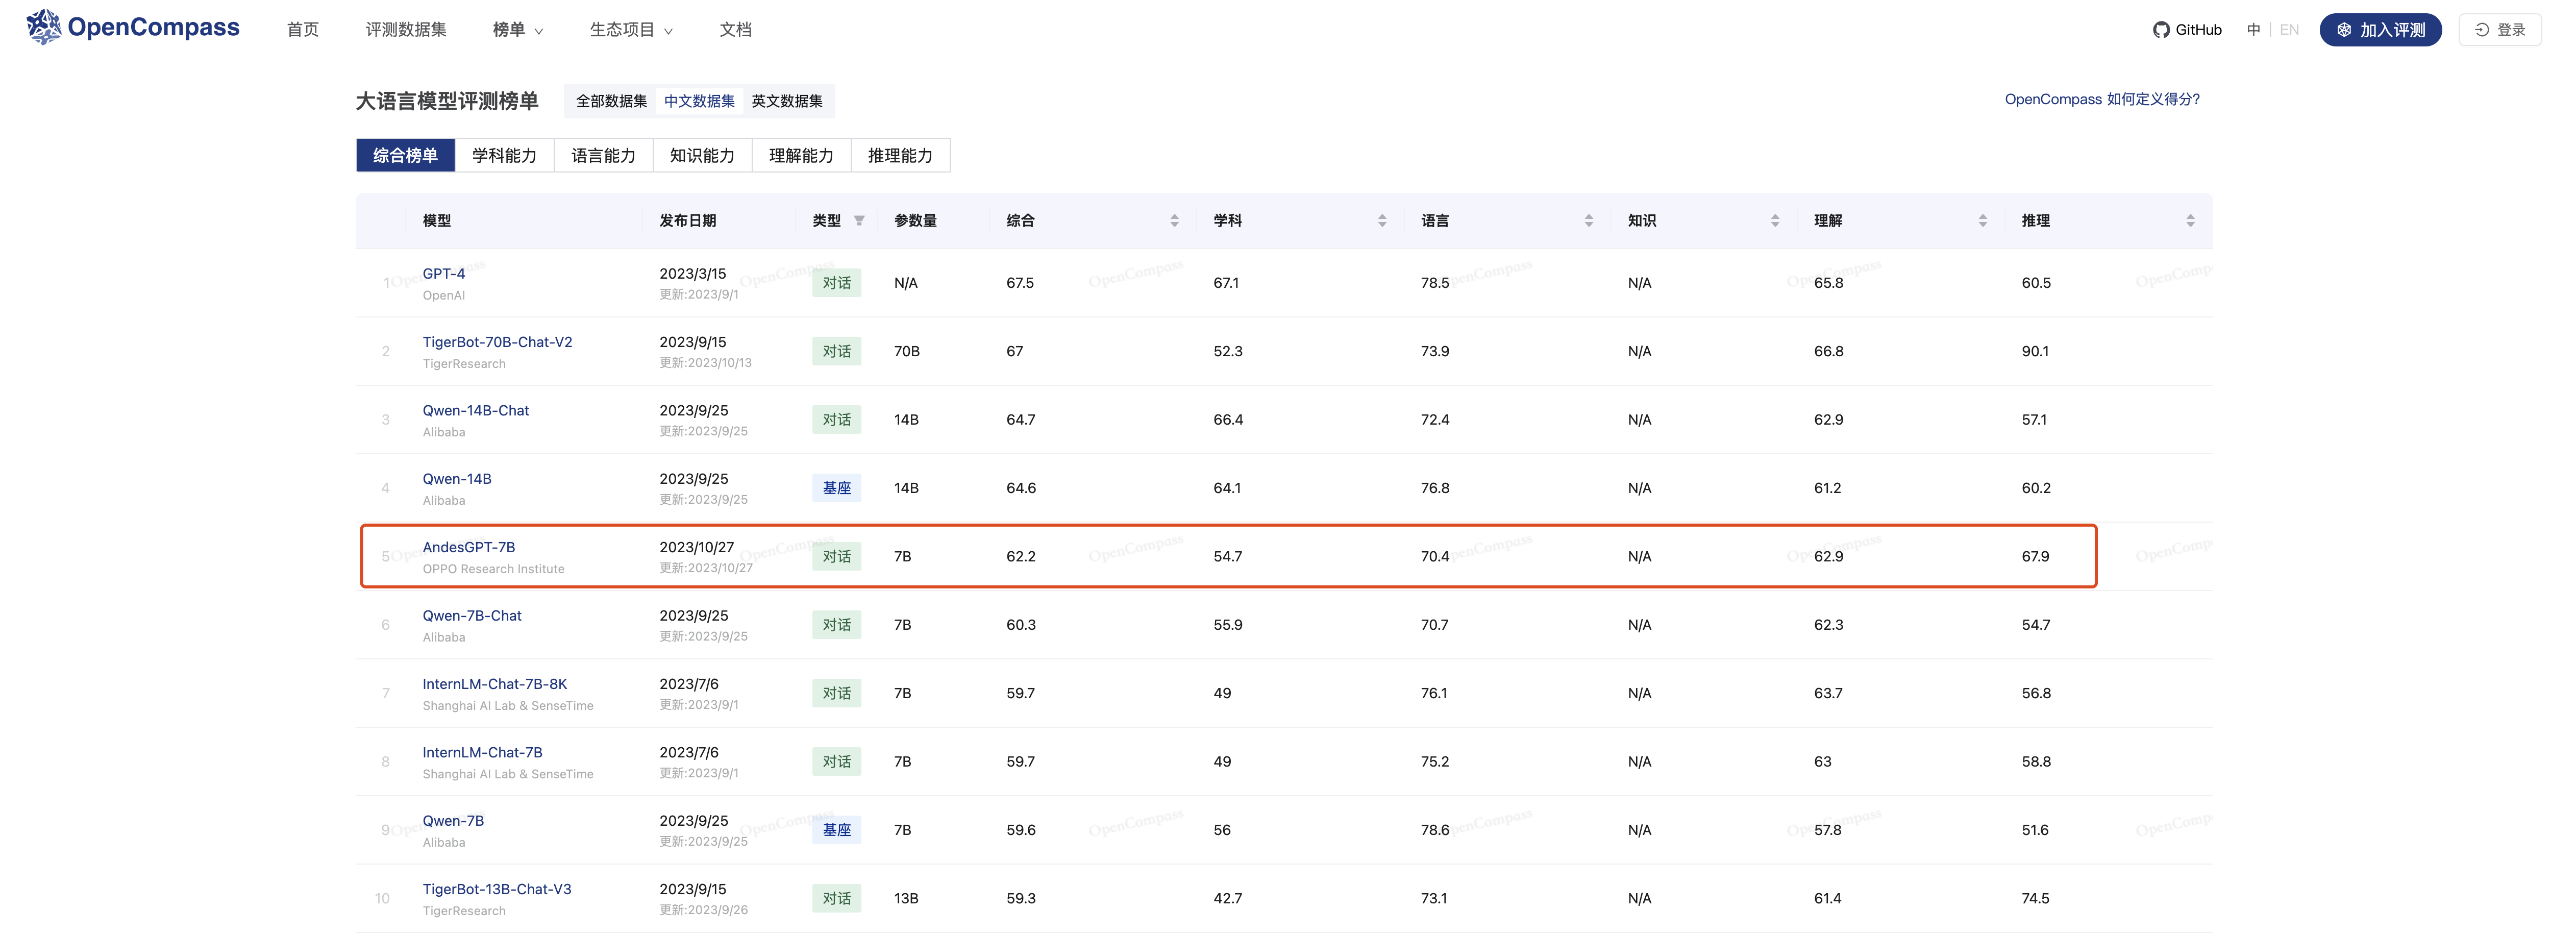 (OpenCompass大讲话模子评测榜单-汉文数据集 2023/10/30)